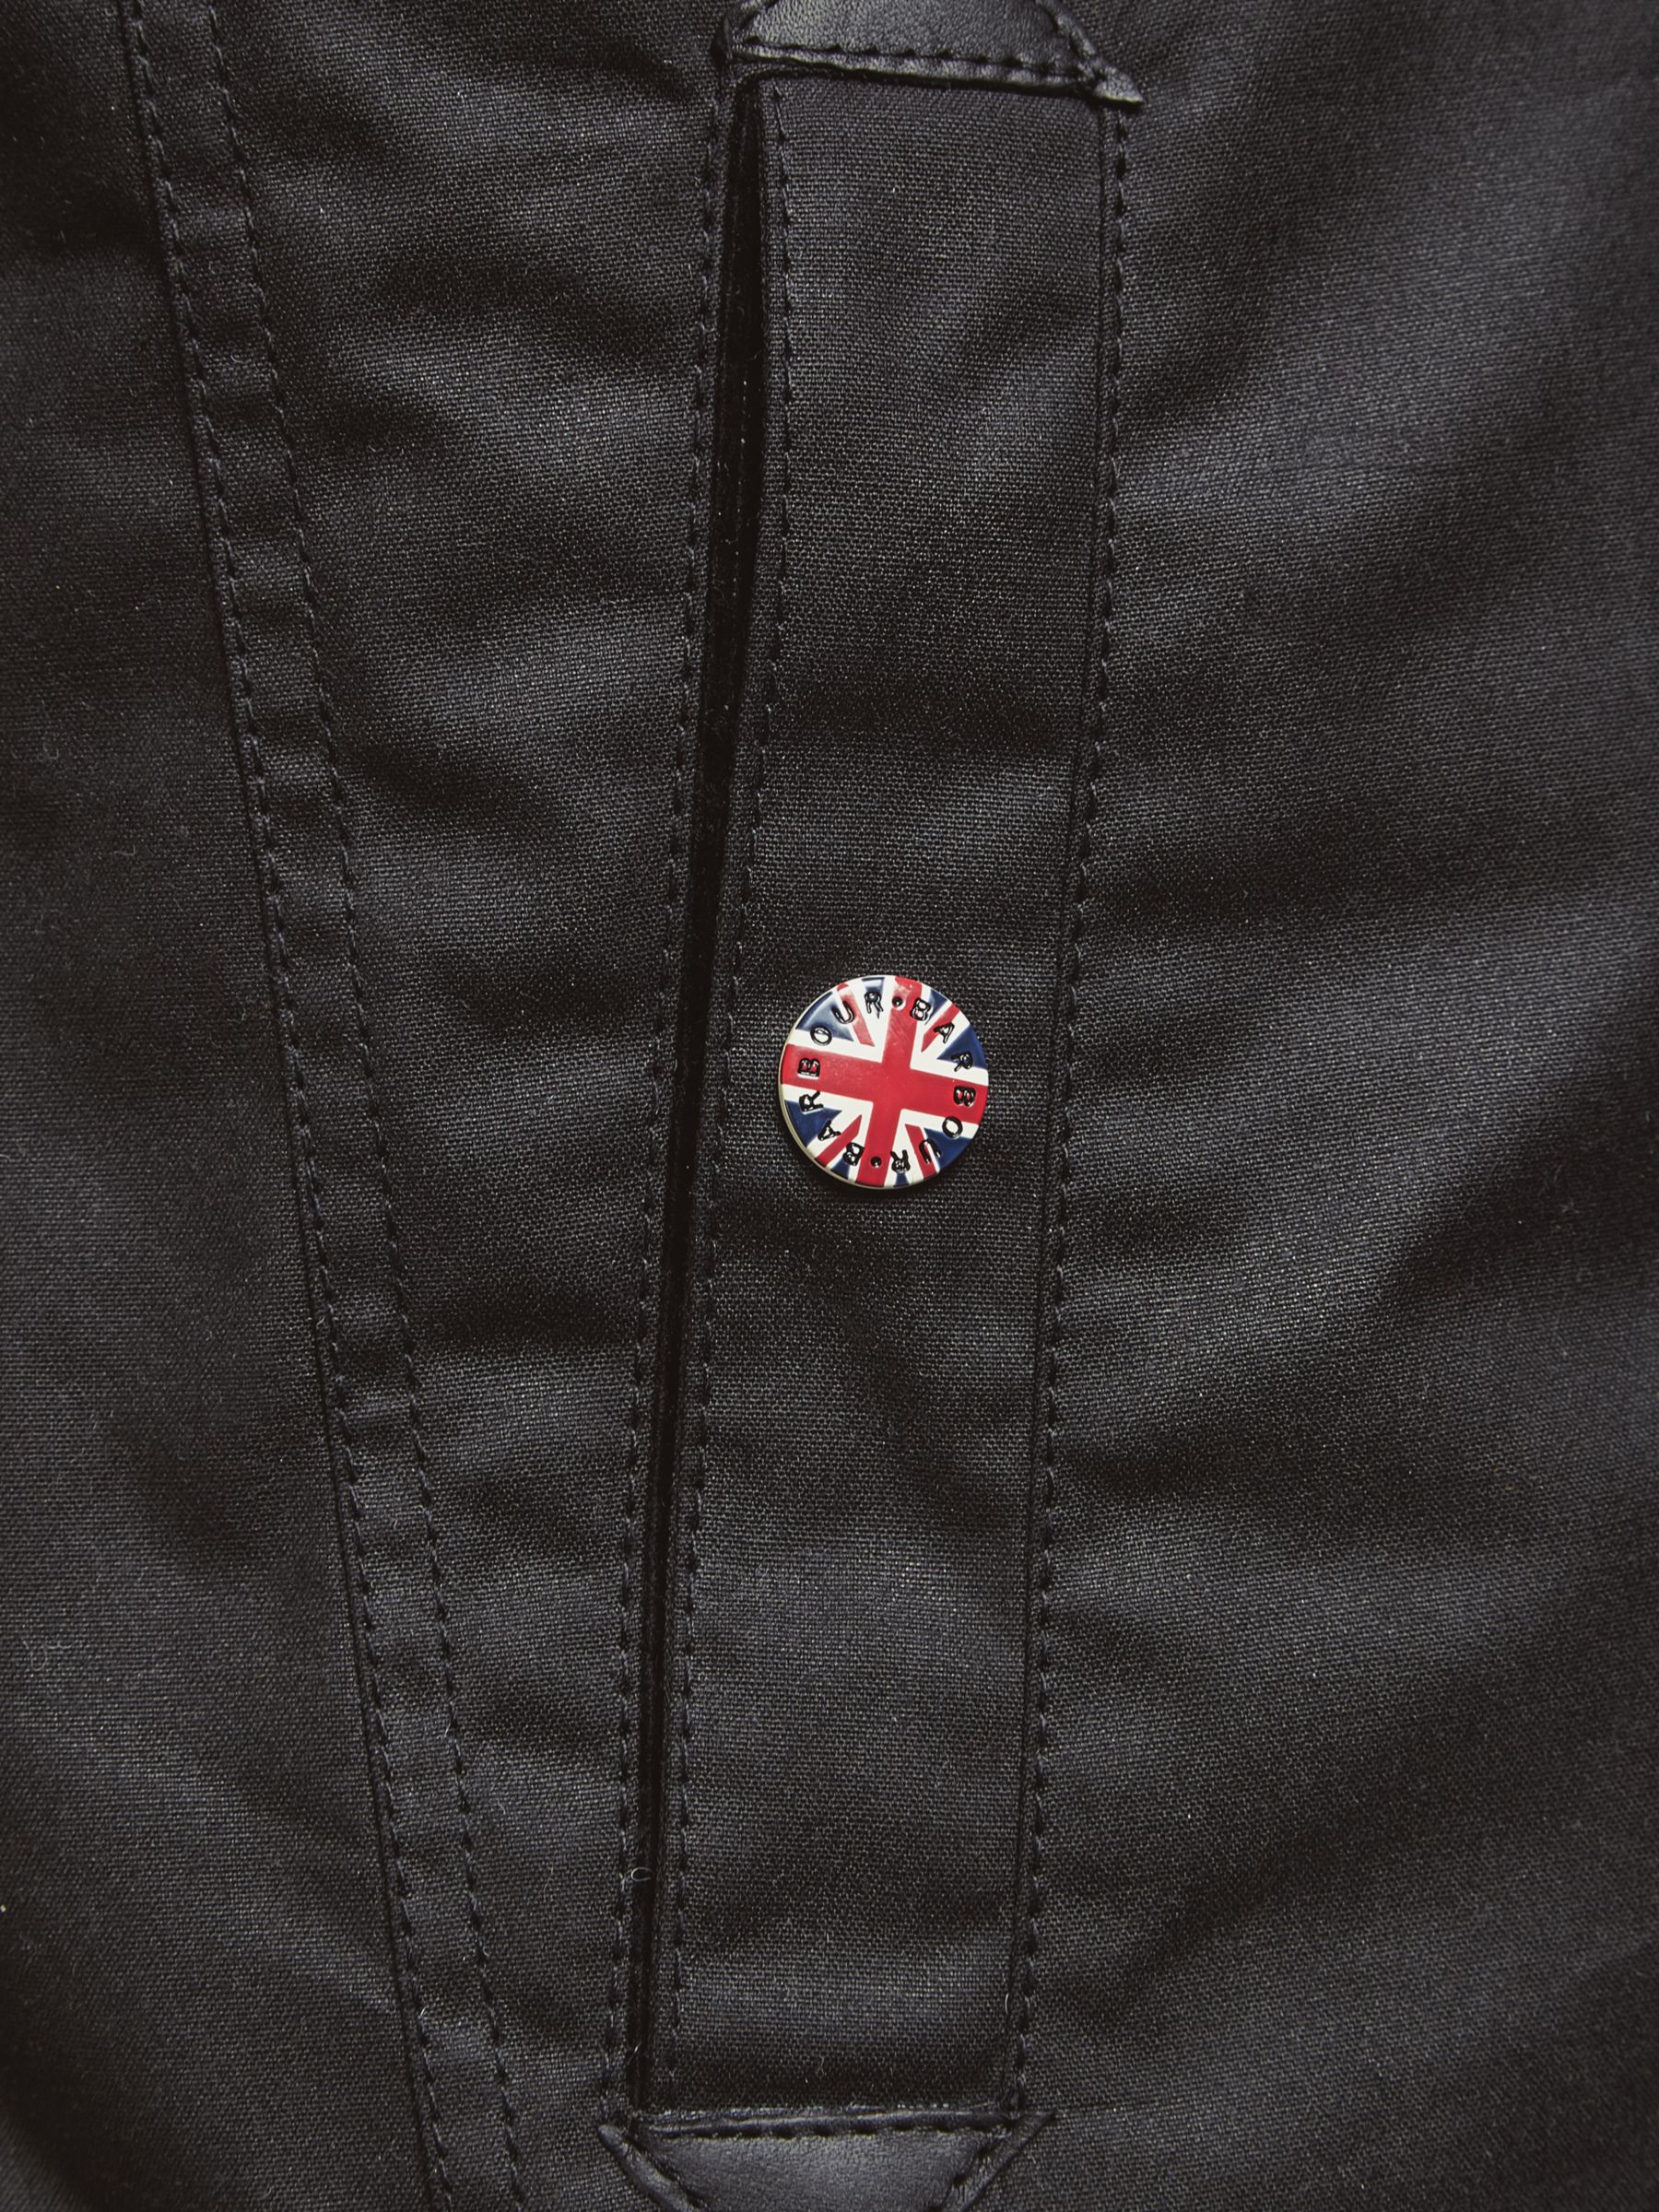 barbour international men's legion wax jacket